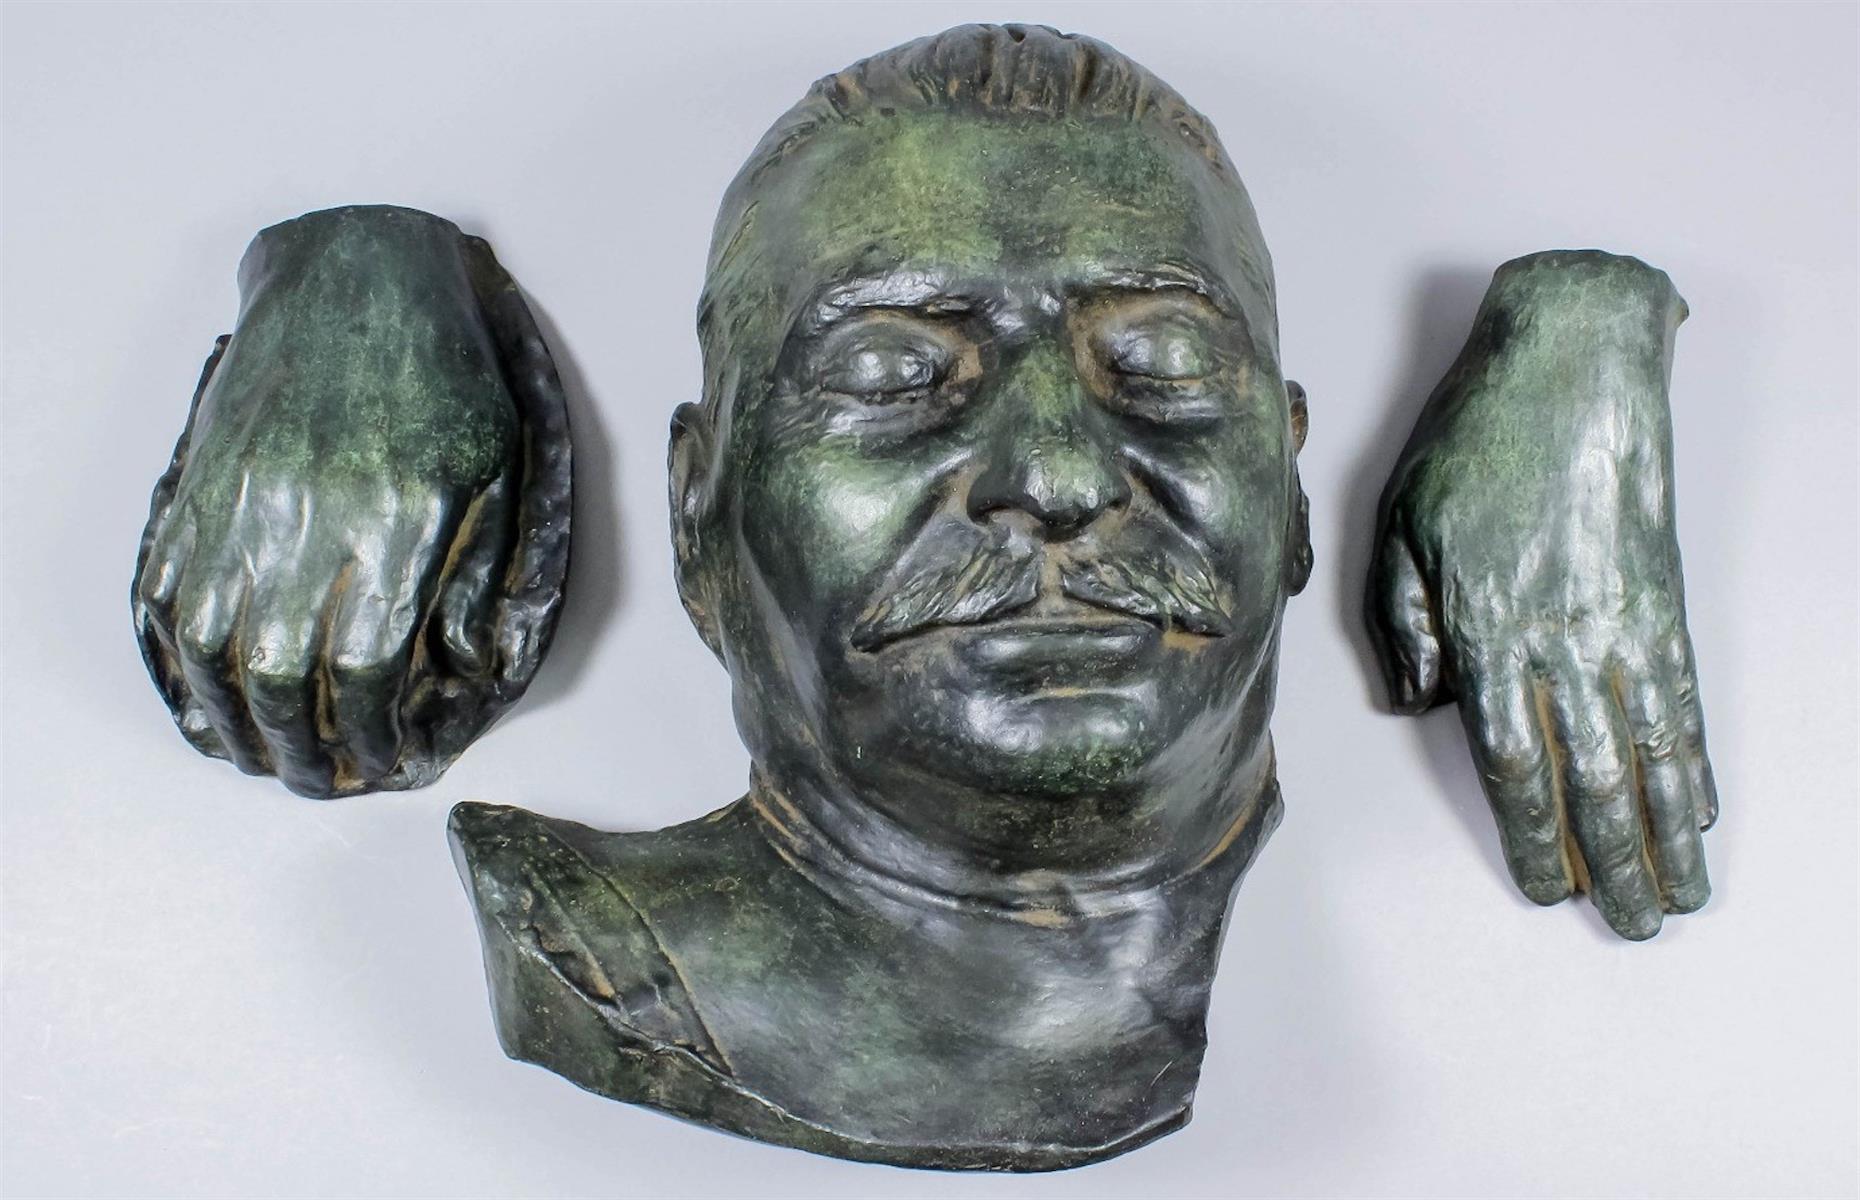 Stalin death mask – $17,200 (£13.5k)